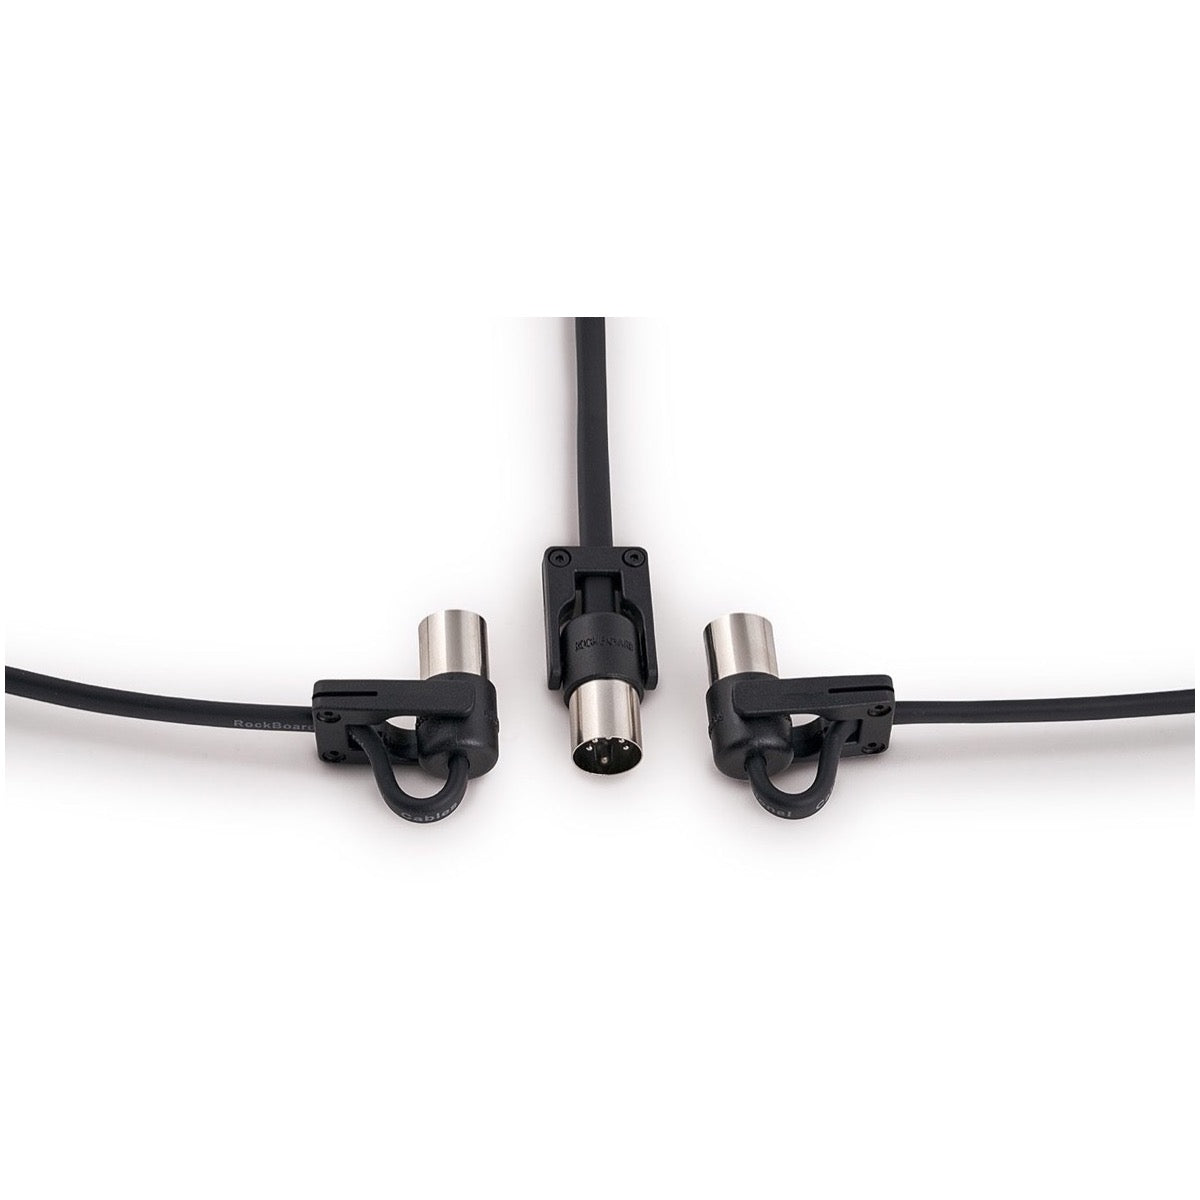 RockBoard FlaX Plug MIDI Cable, 100cm